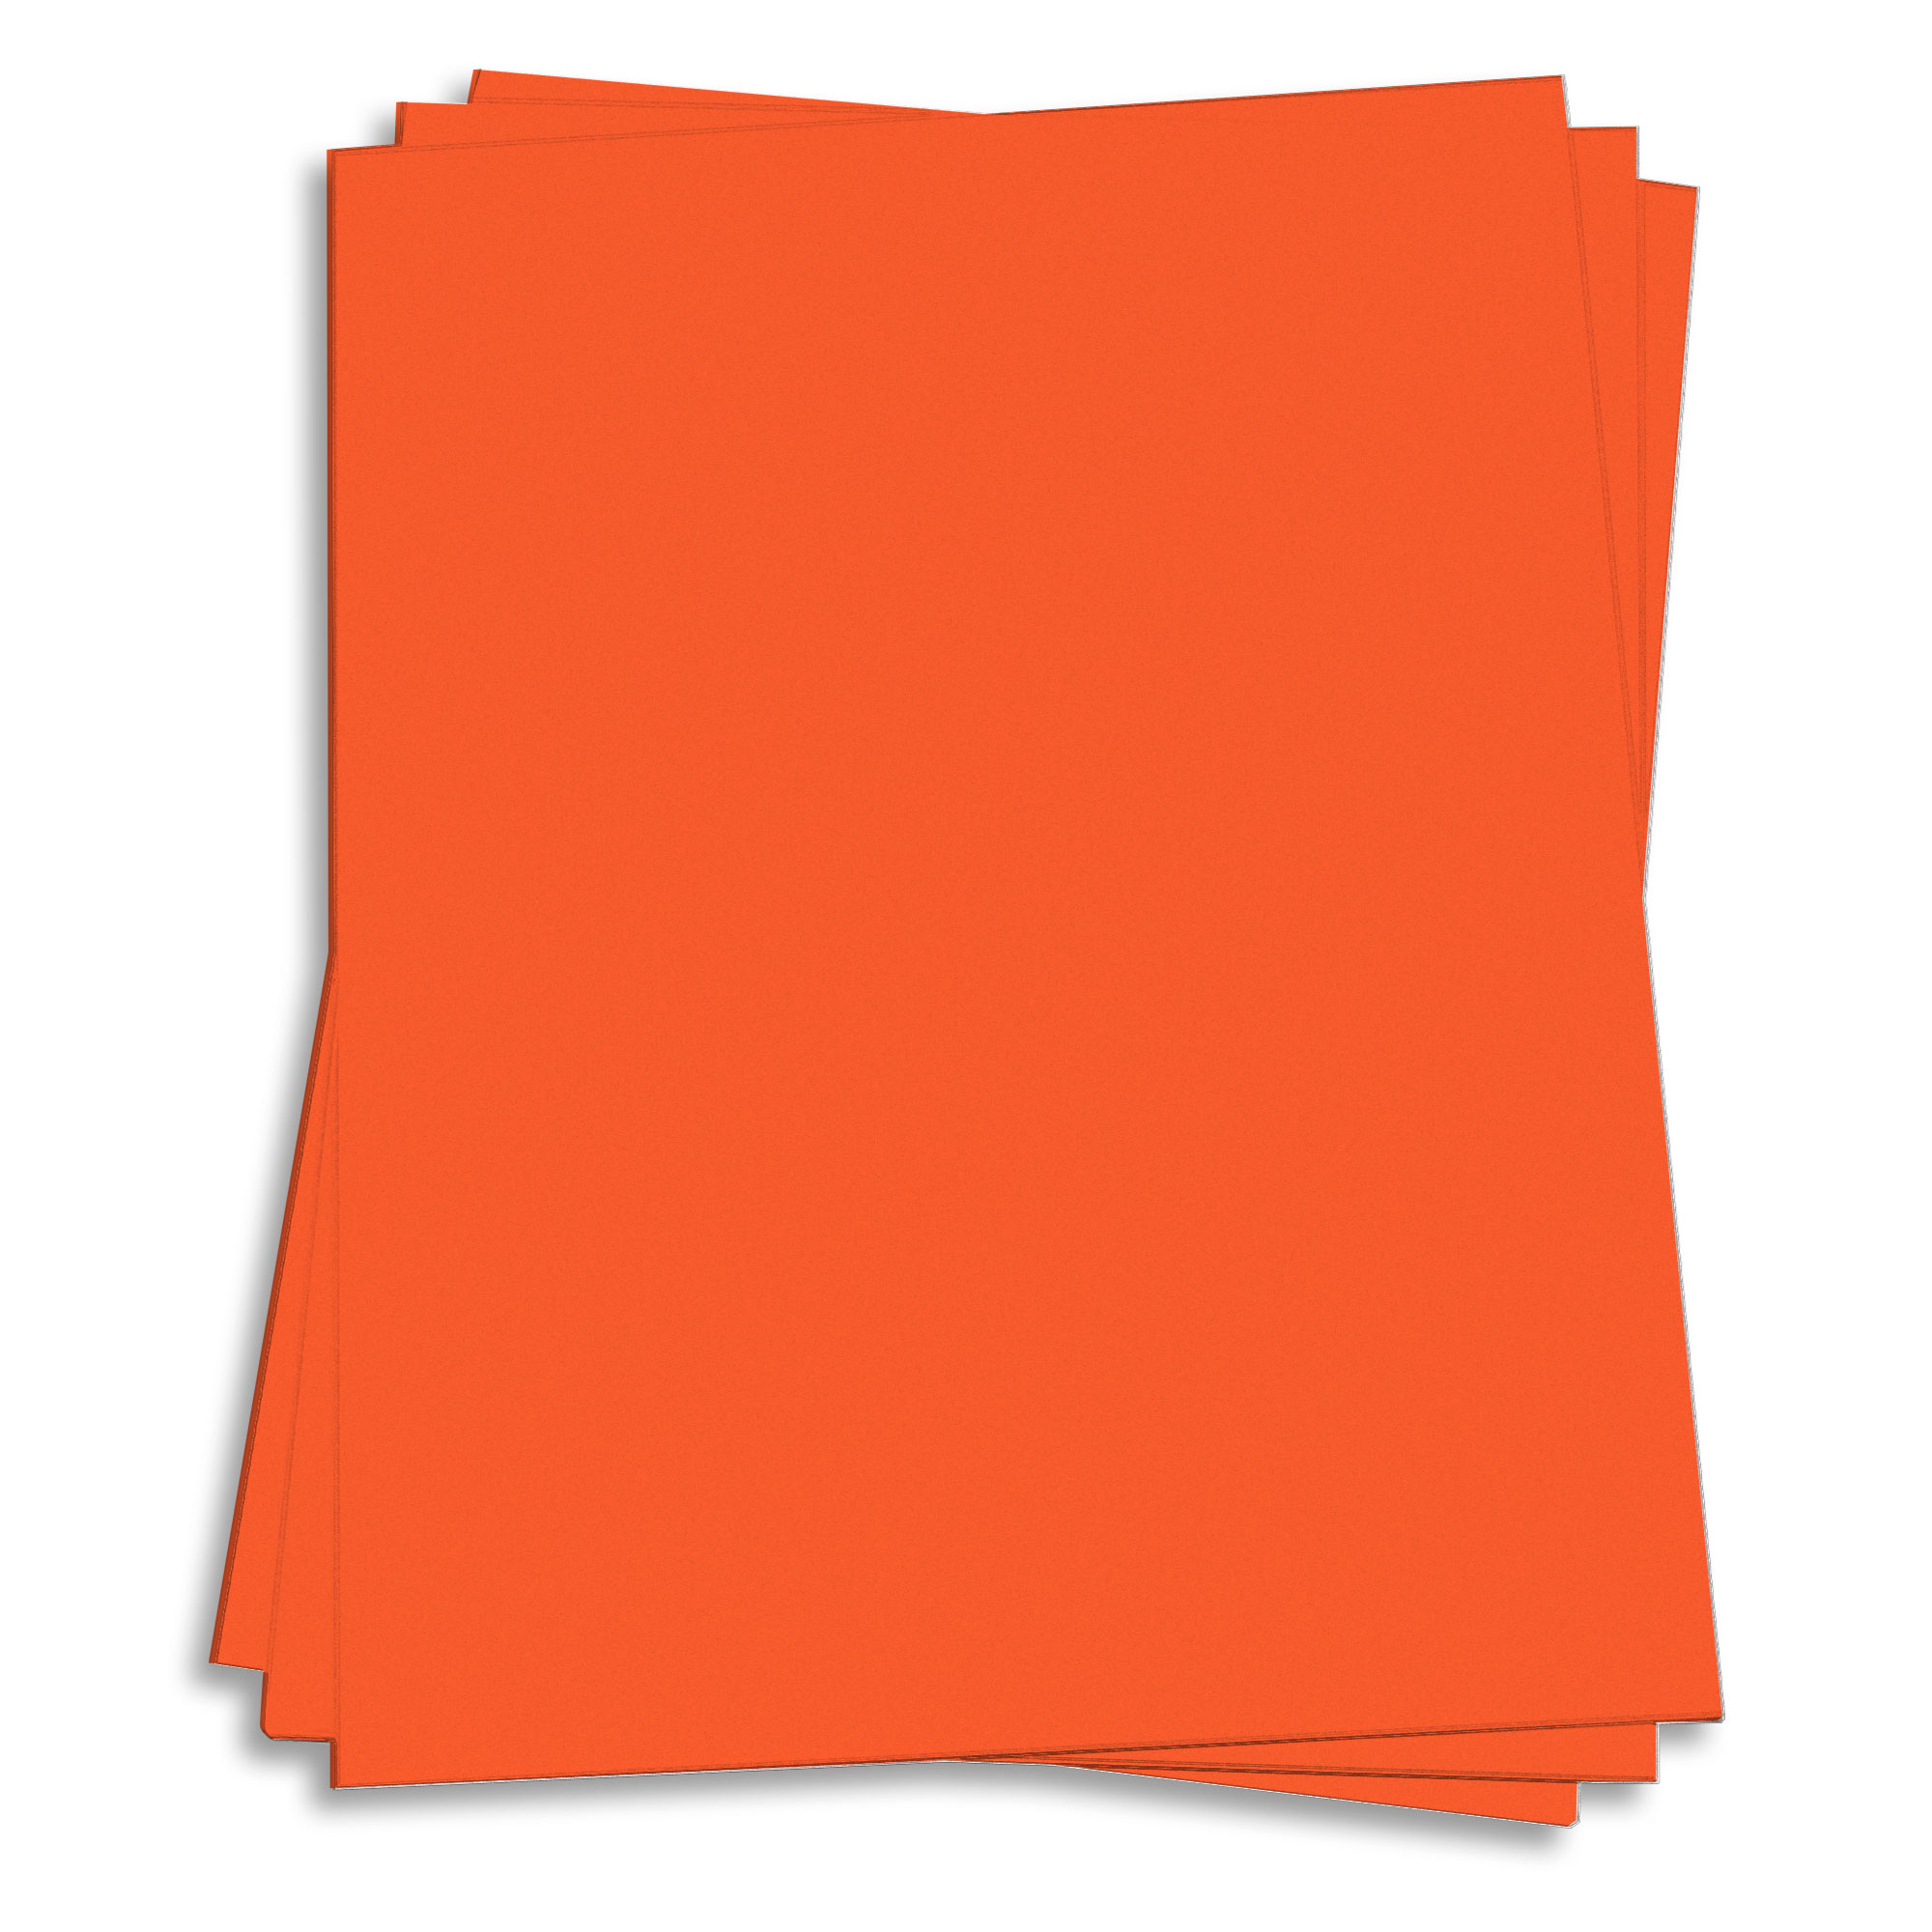 Orbit Orange Card Stock - 8 1/2 x 11 65lb Cover